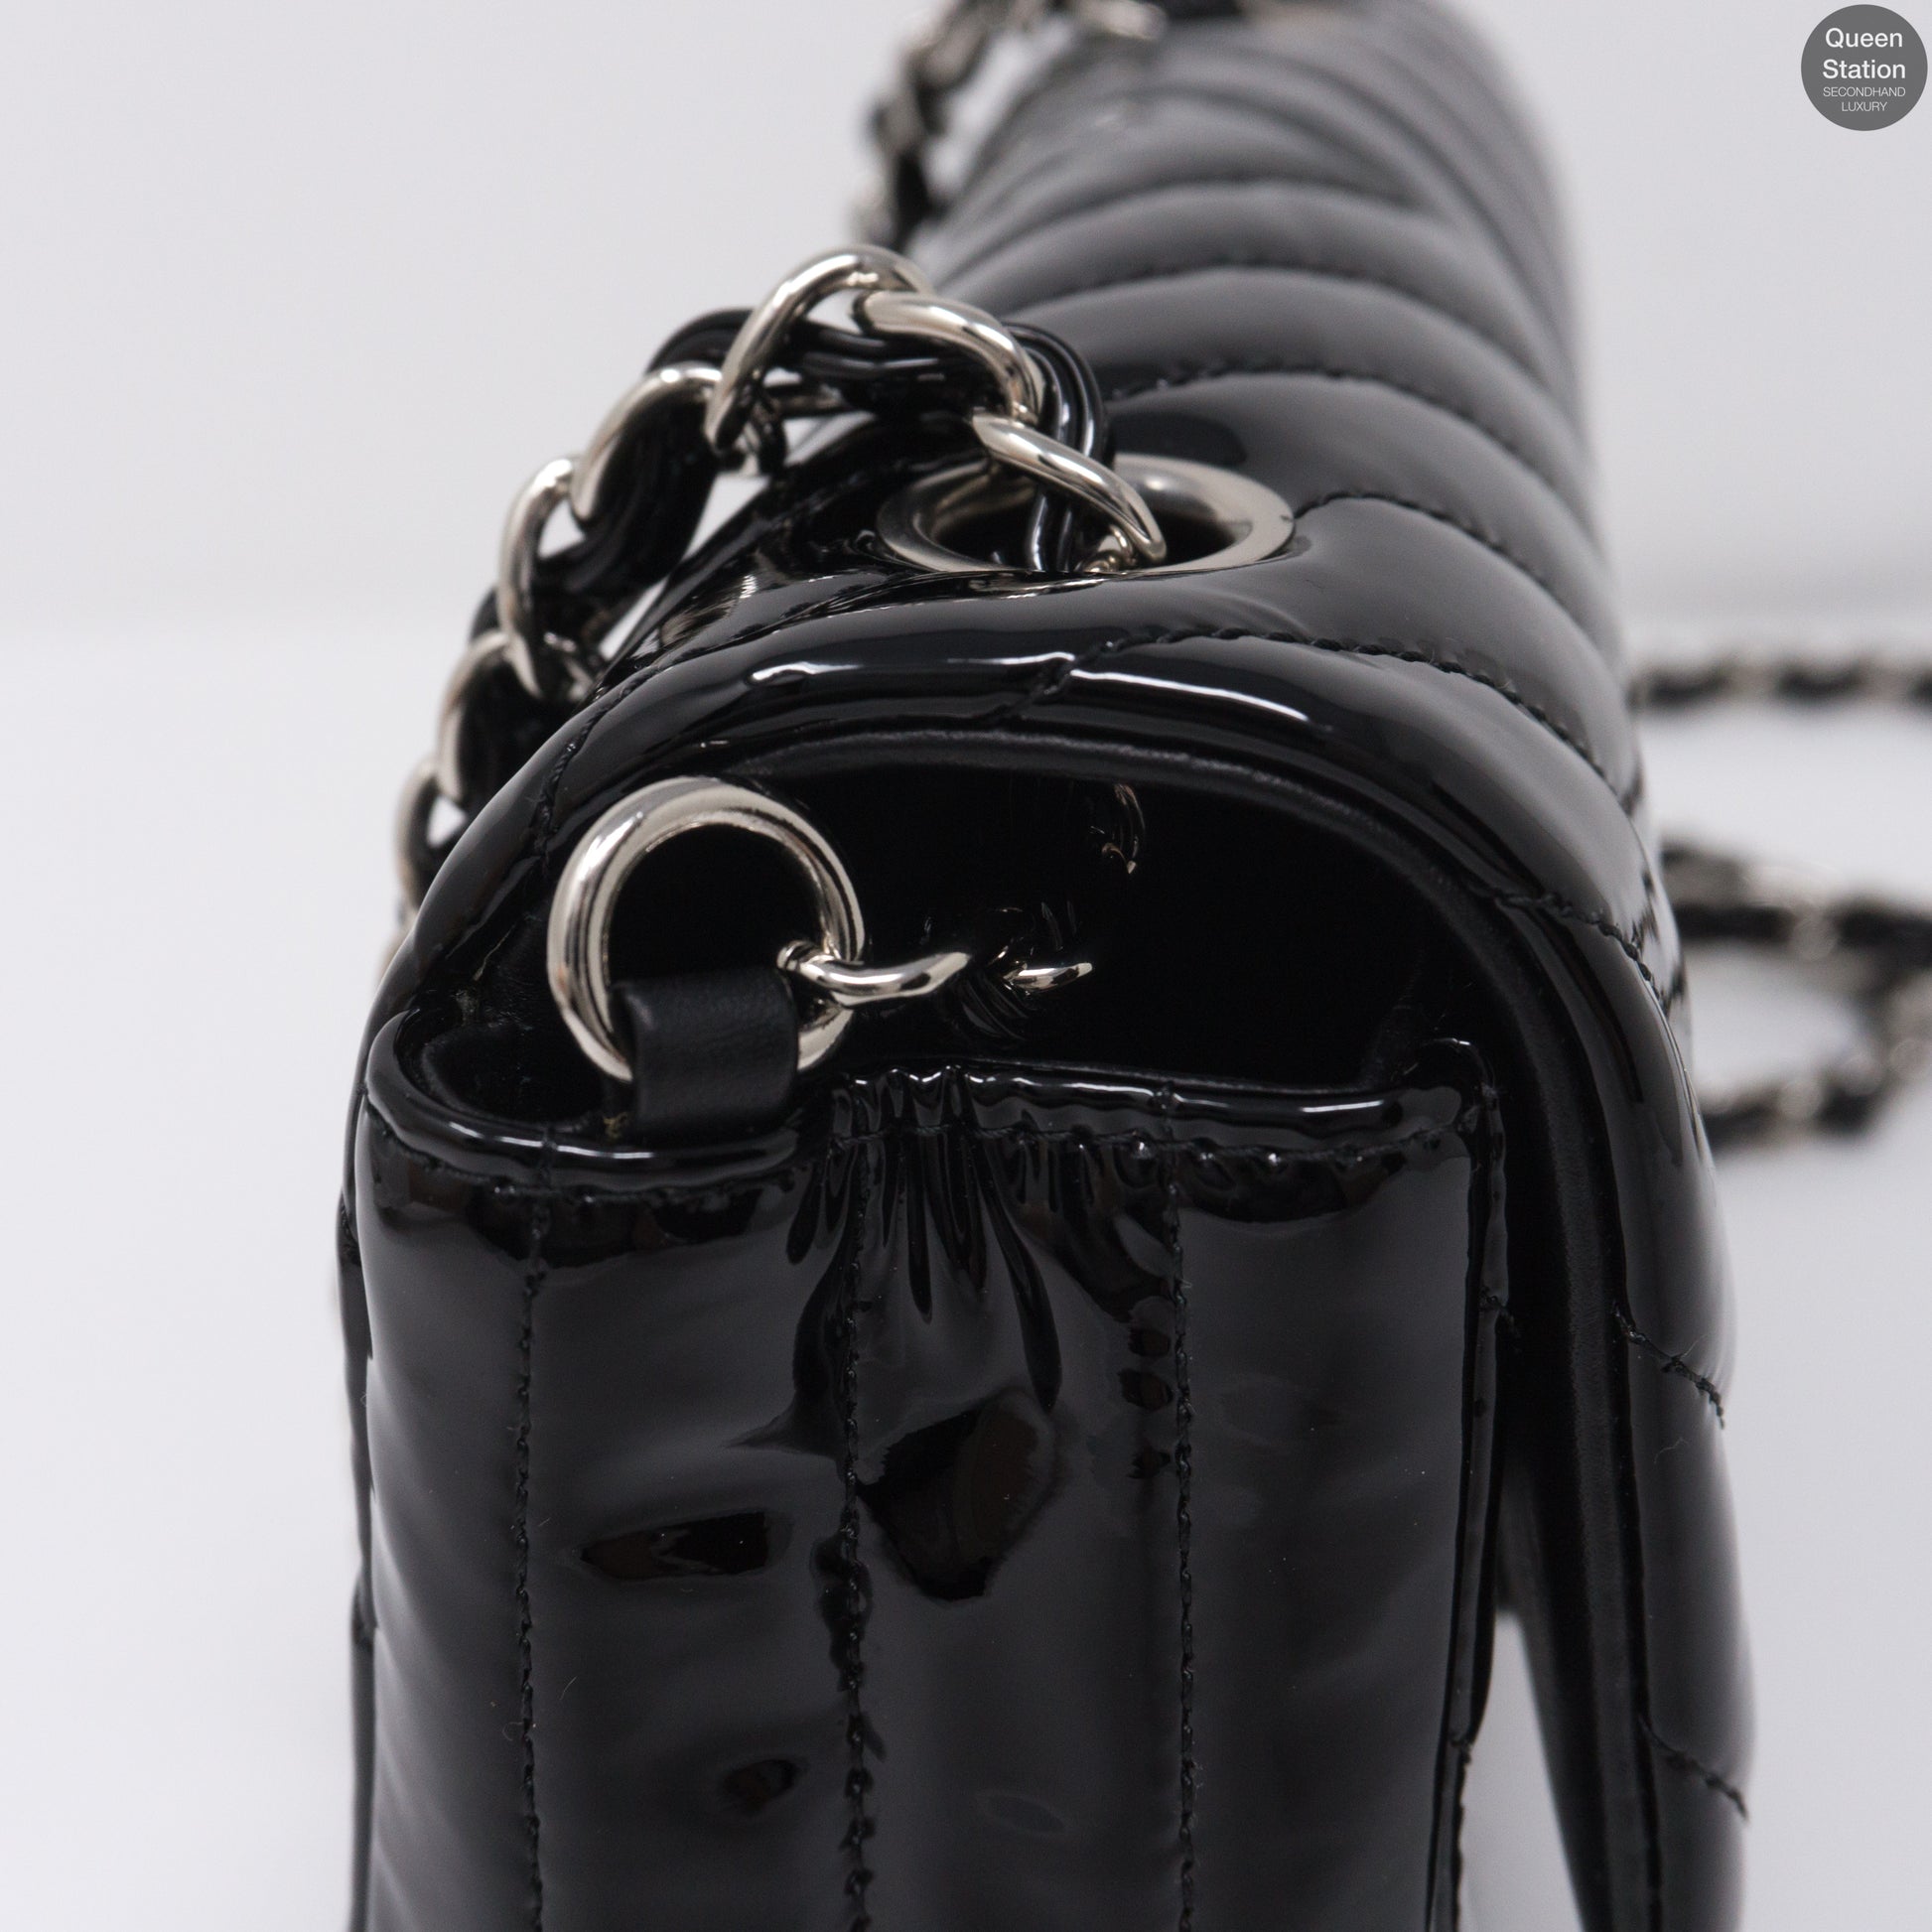 Chanel – Chevron Rectangular Mini Flap Black Patent Leather Bag – Queen  Station